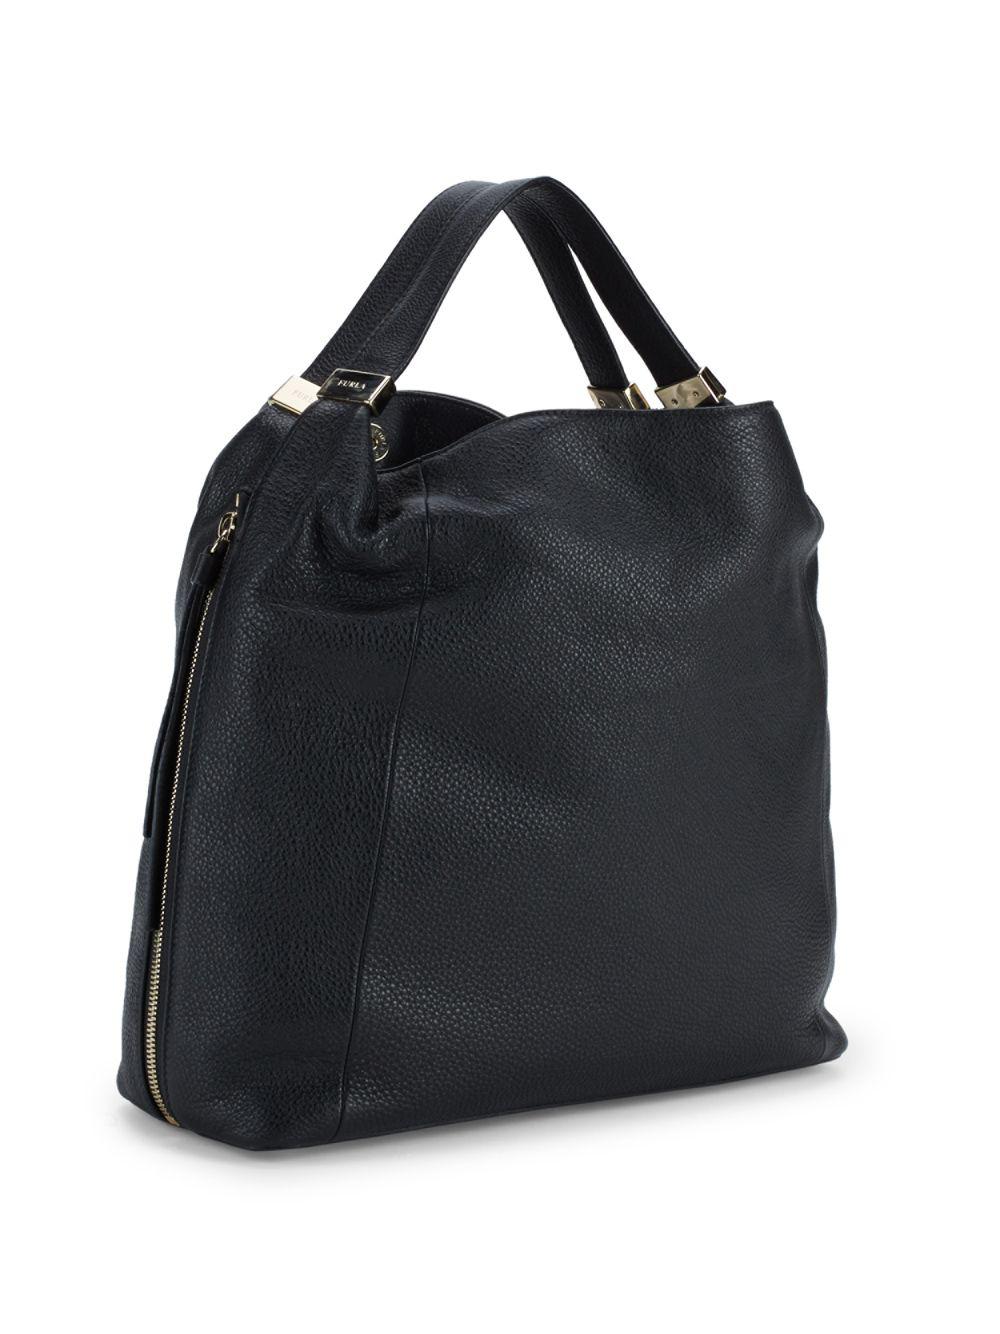 Furla Liz Leather Hobo Bag in Onyx (Black) - Lyst